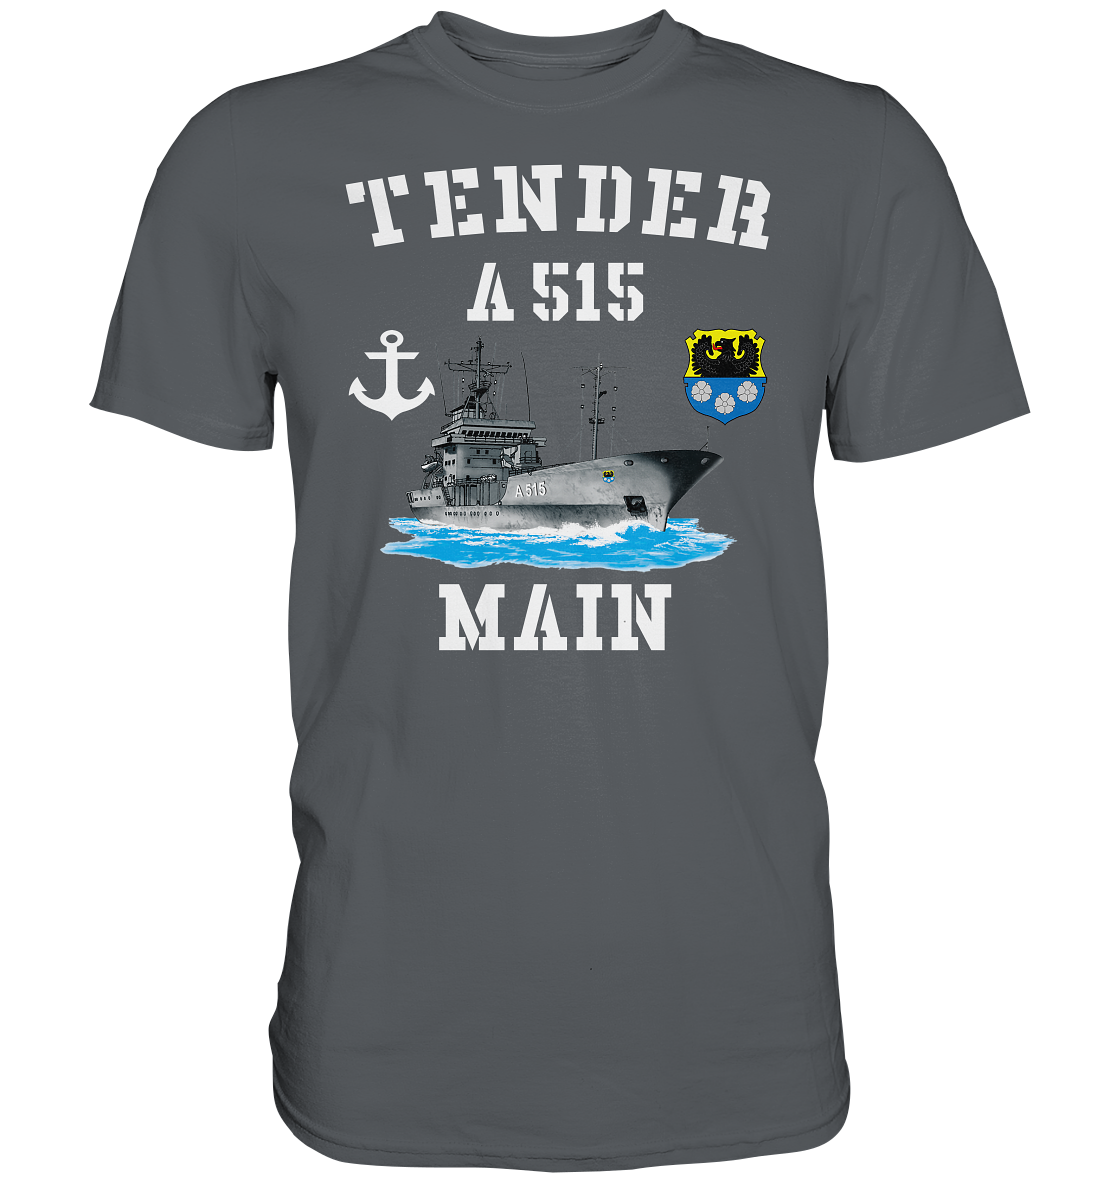 Tender A515 MAIN Anker - Premium Shirt